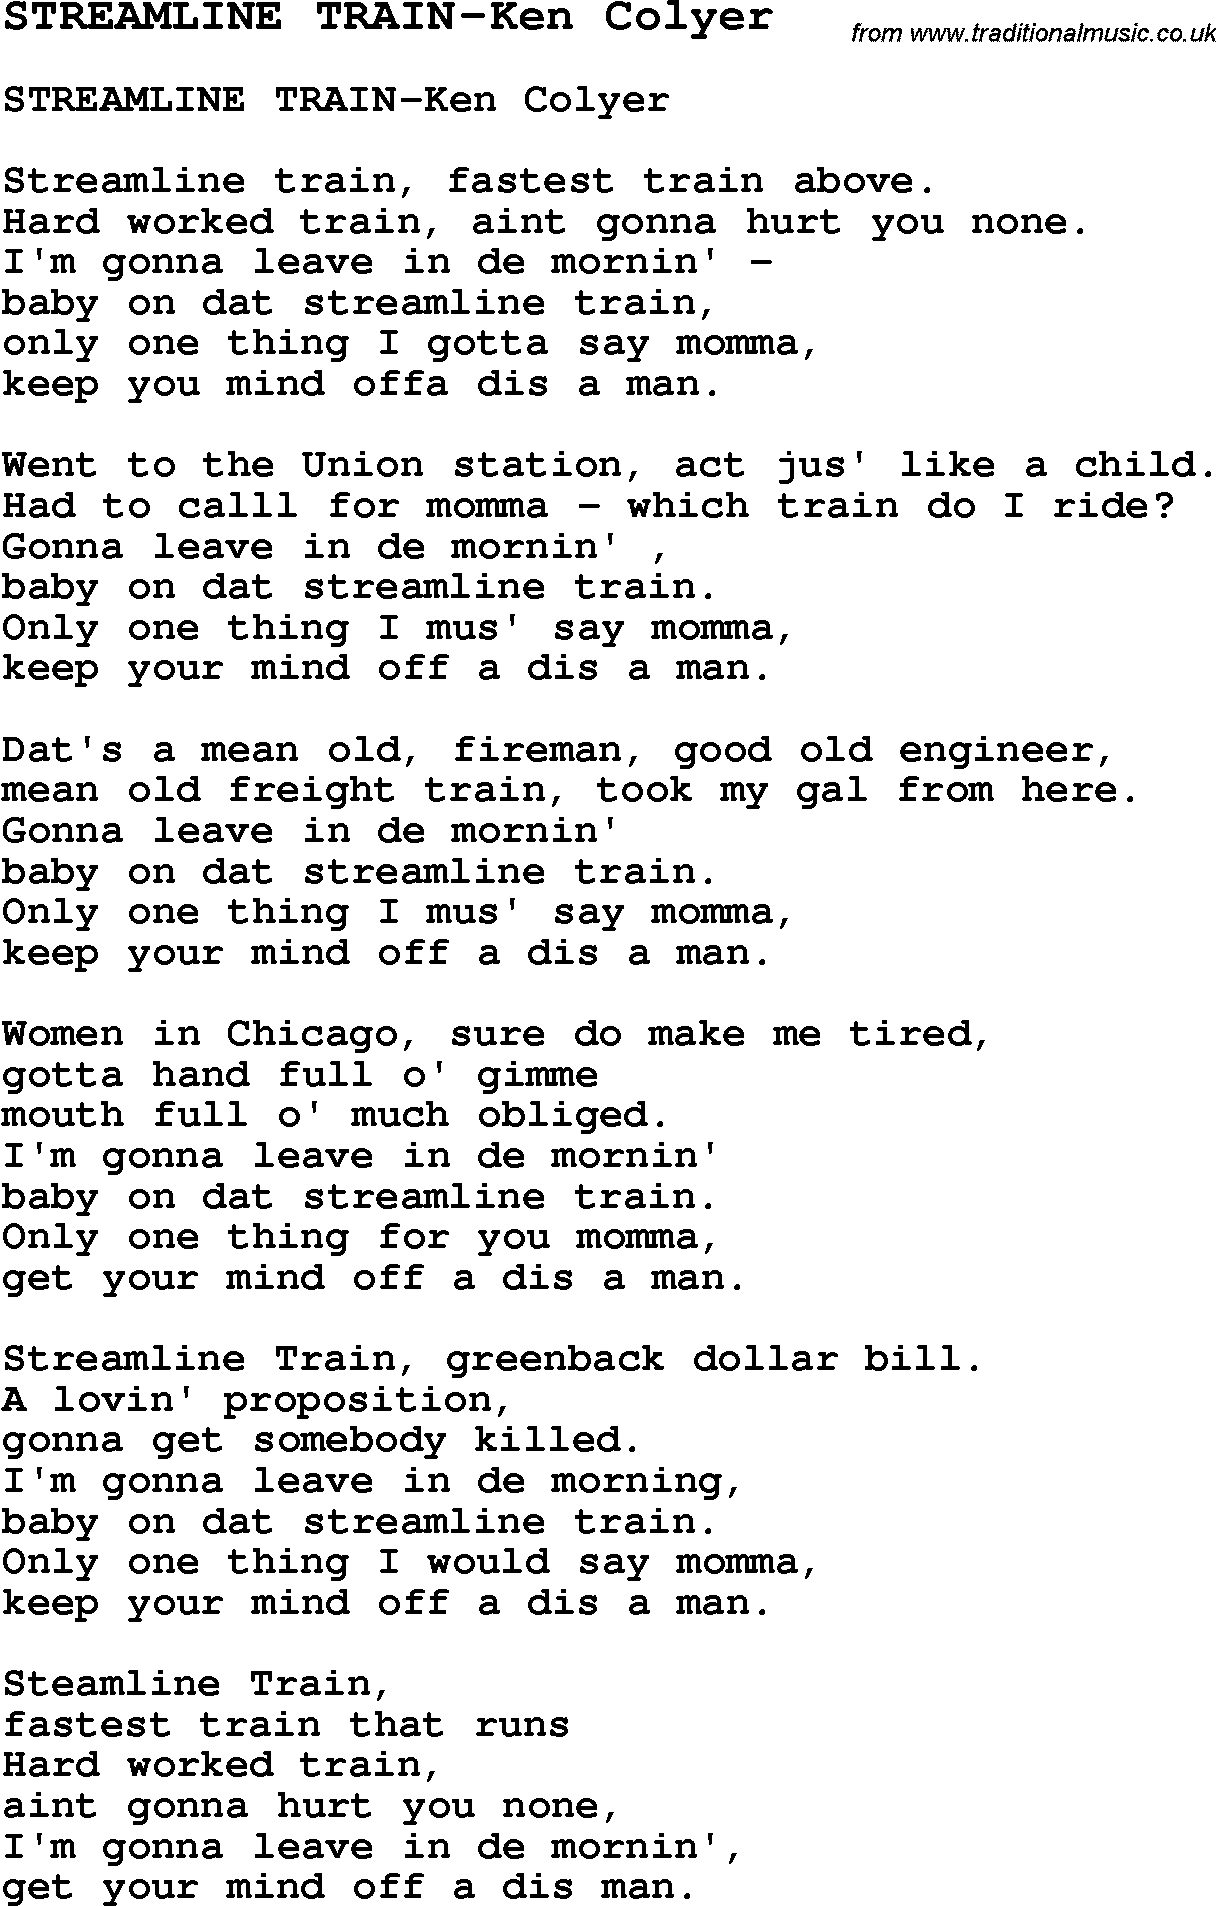 Skiffle Song Lyrics for Streamline Train-Ken Colyer.